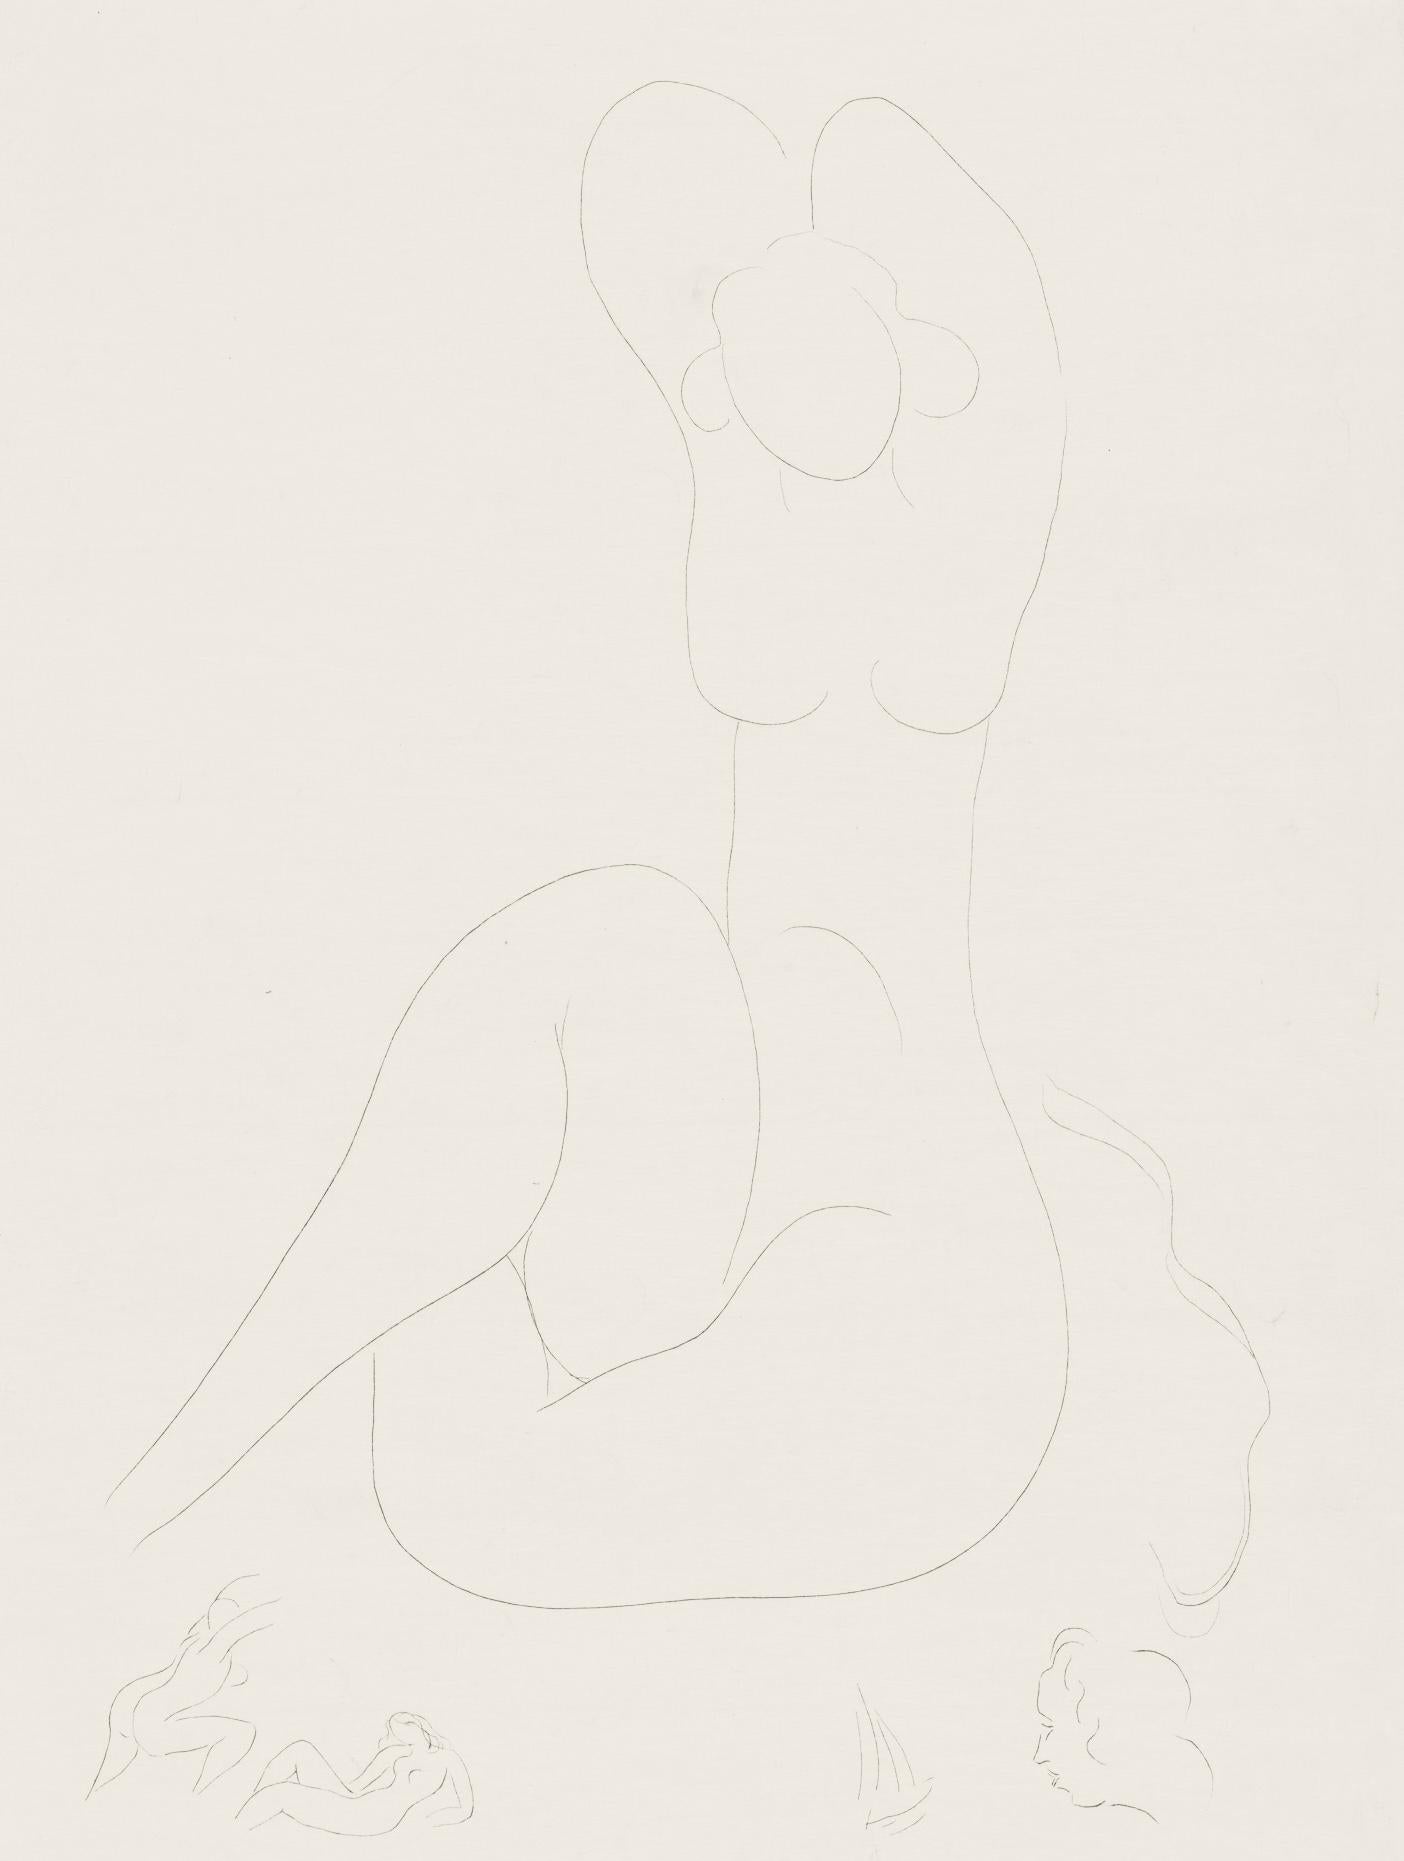 Matisse, Composition, Poésies (after)